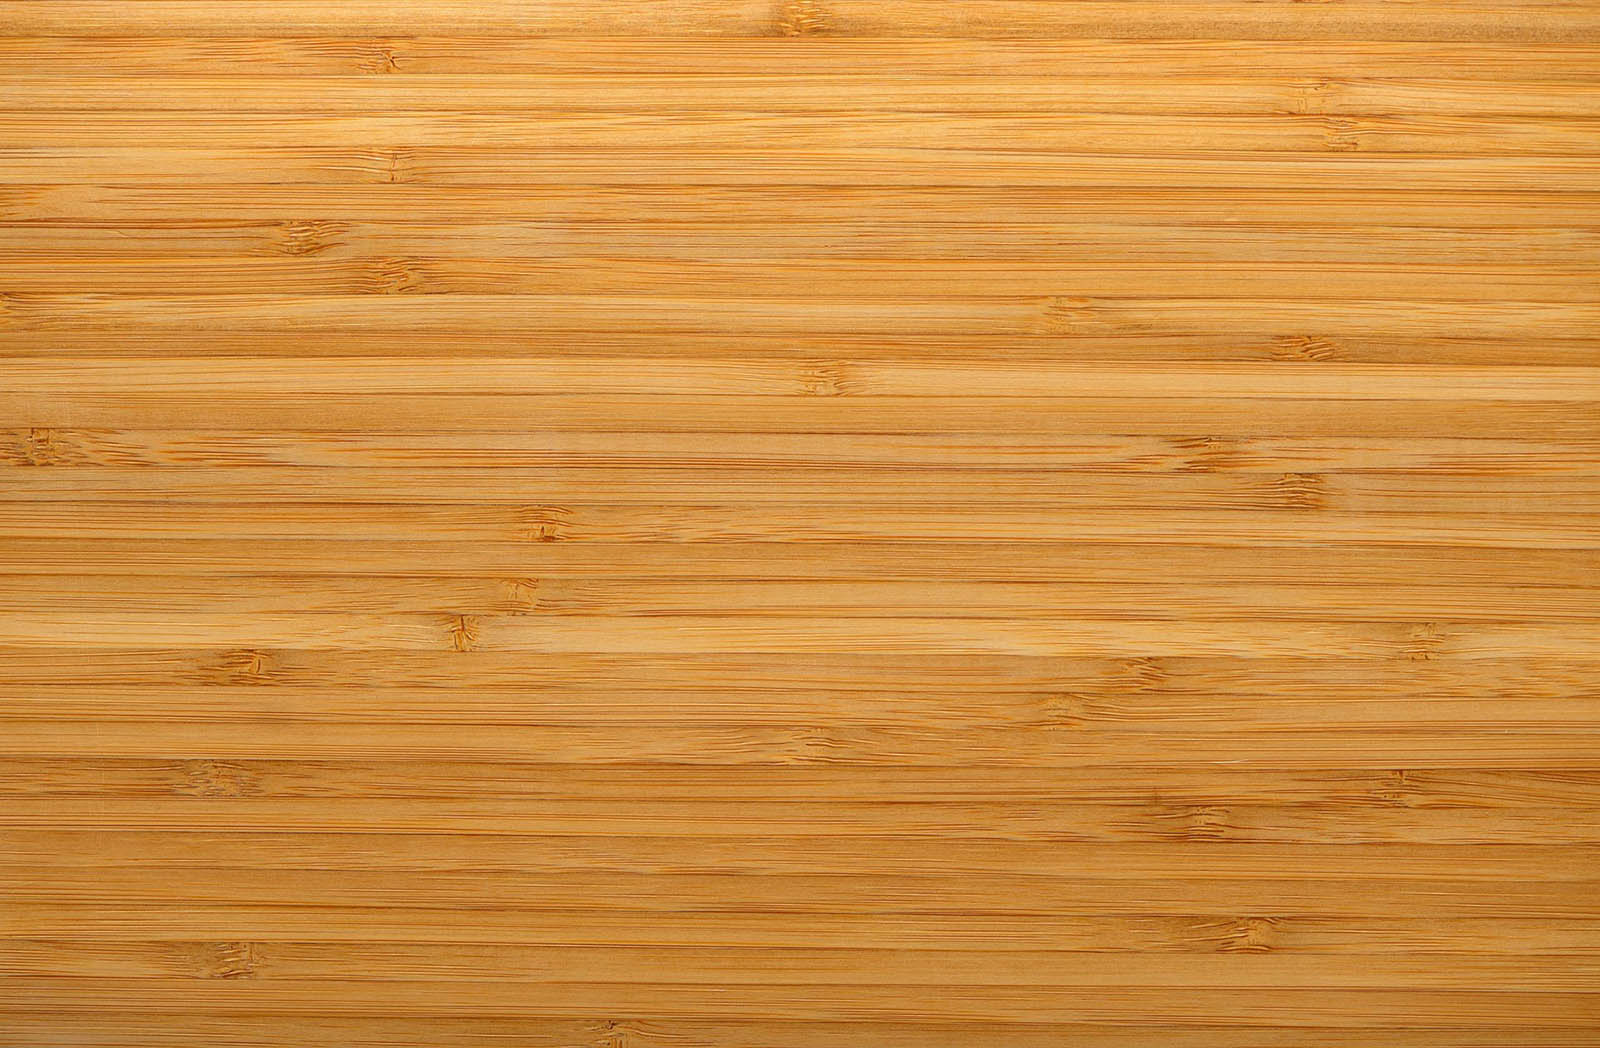 Indoor Basketball Court Background For